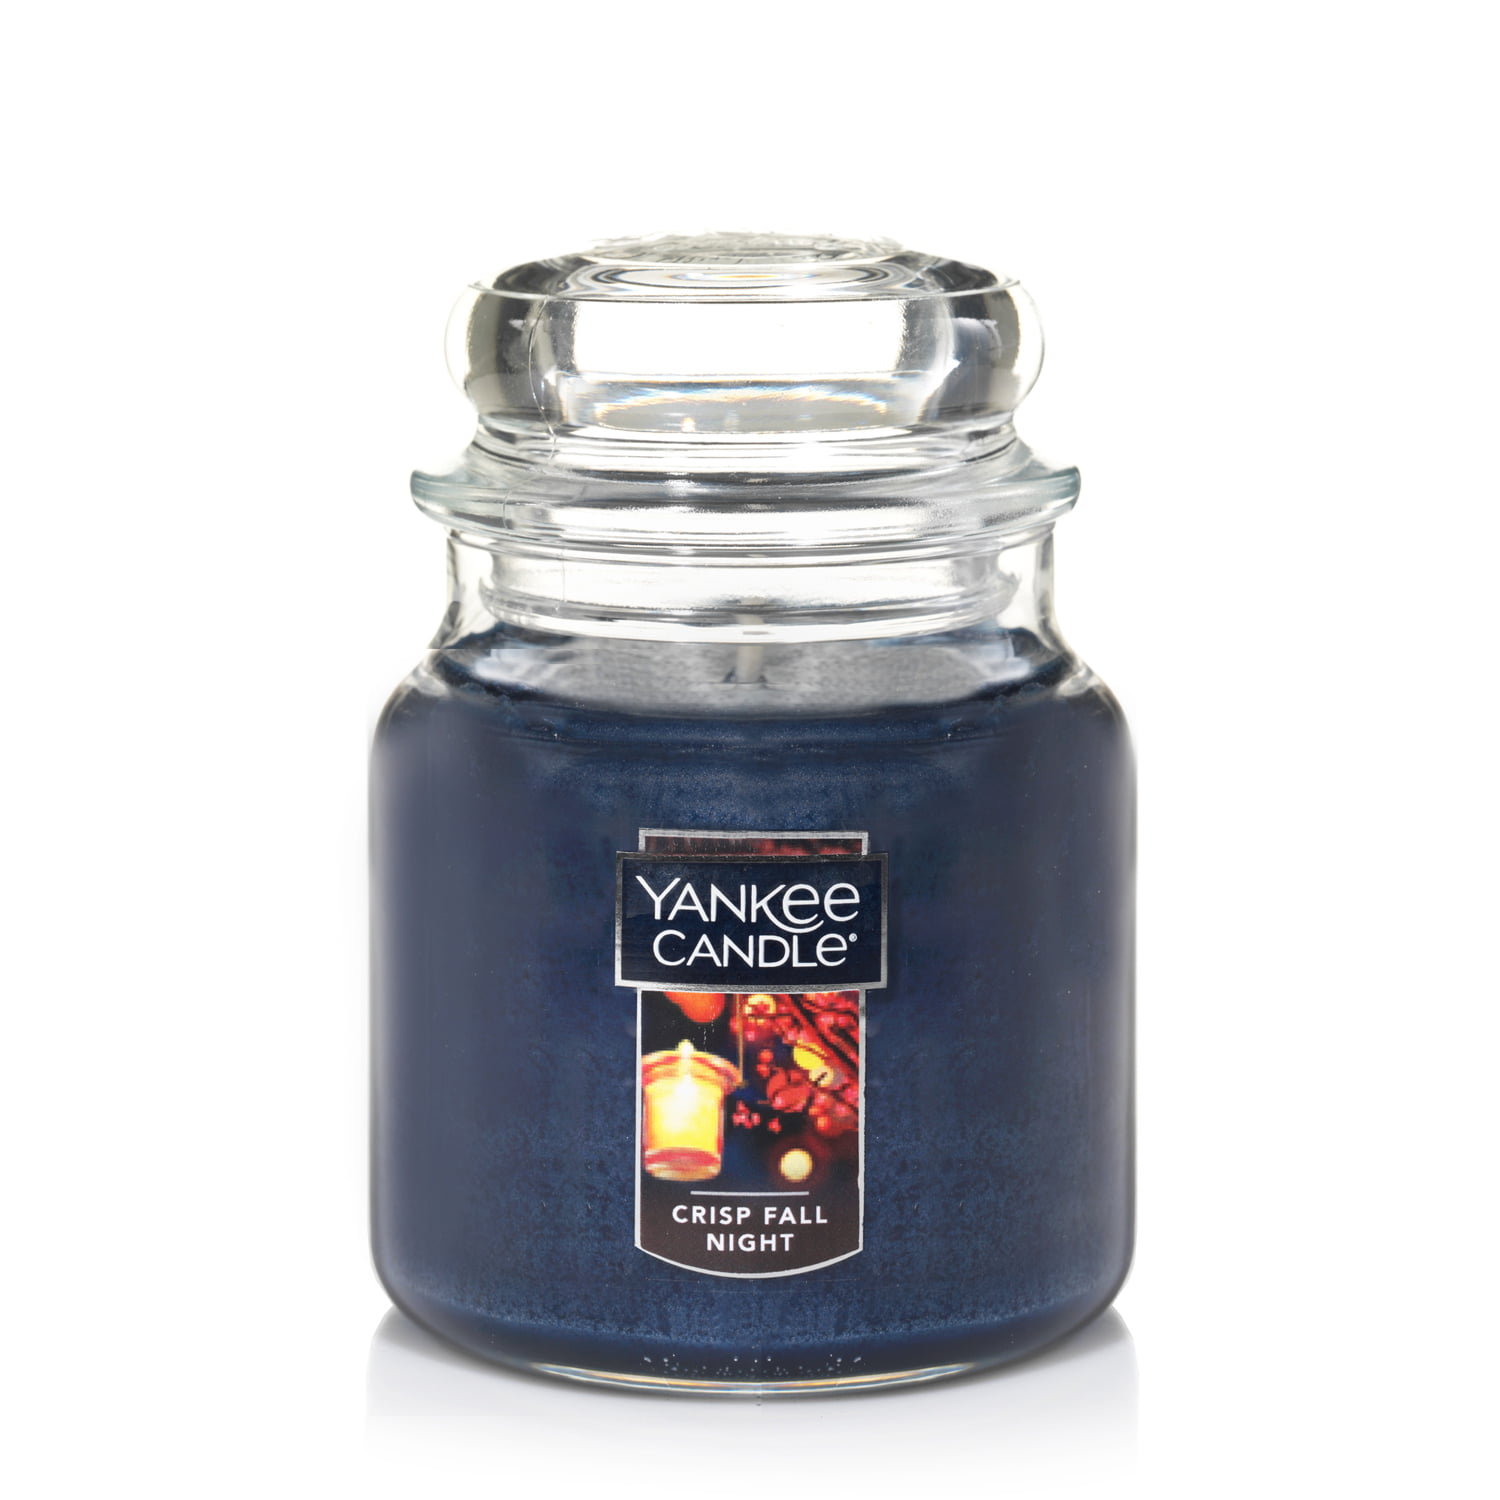 Yankee Candle Medium Jar Candle, Crisp Fall Night - Walmart.com ...